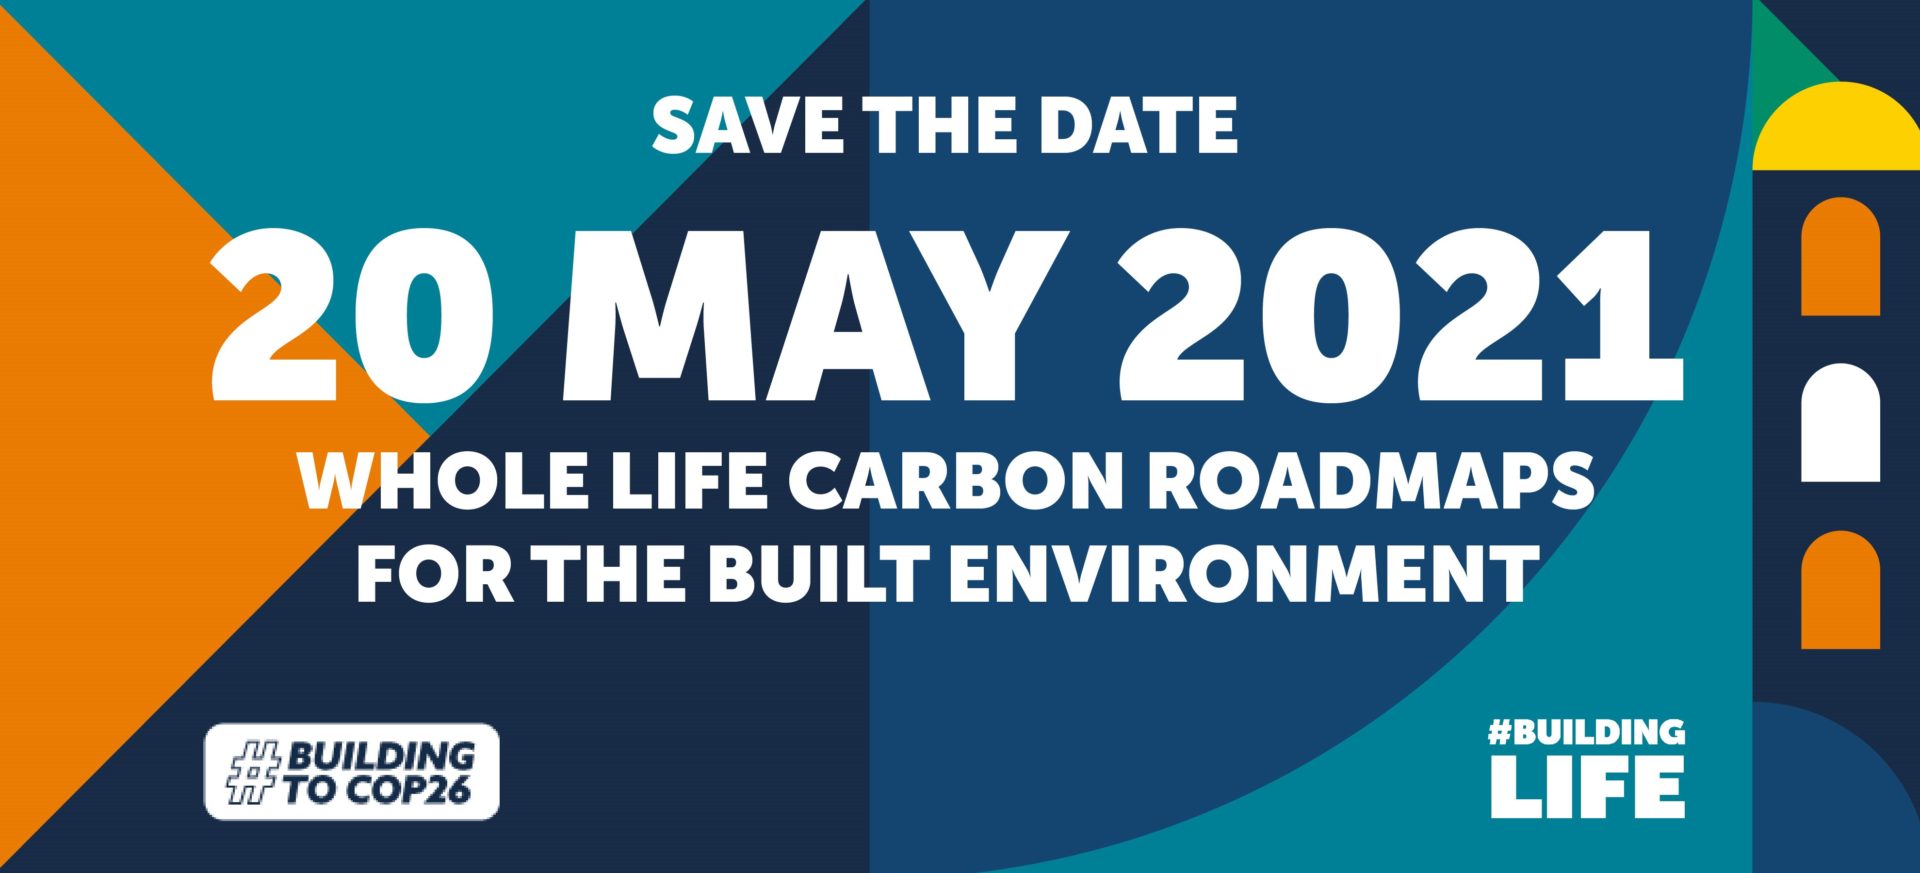 #BuildingLife webinar - Whole Life Carbon Roadmaps for the Built Environment